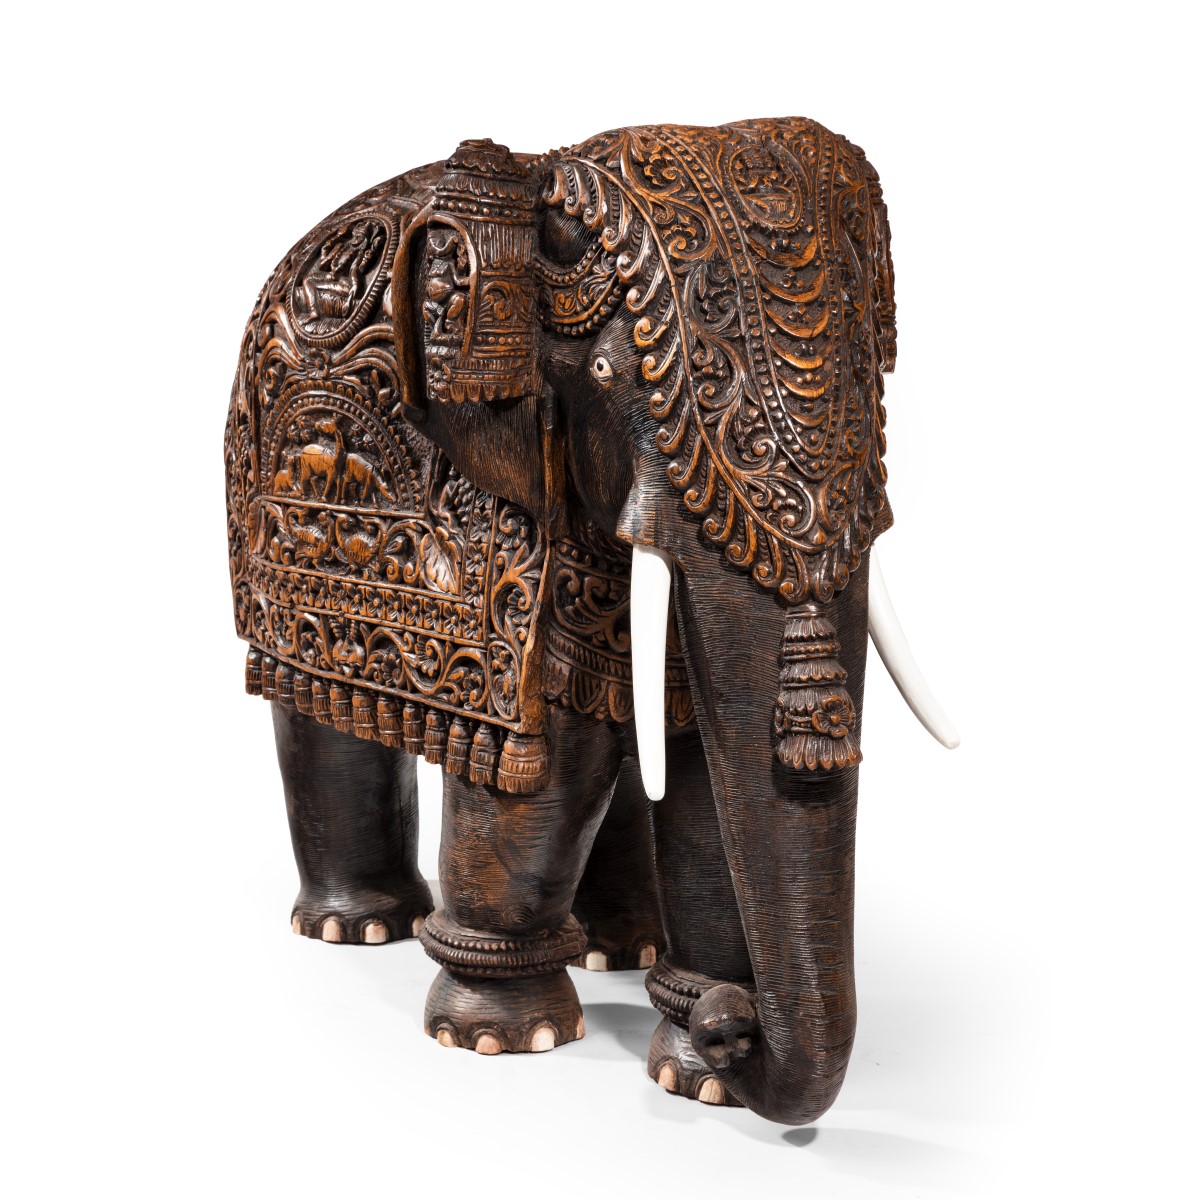 An Indian carved hardwood elephant